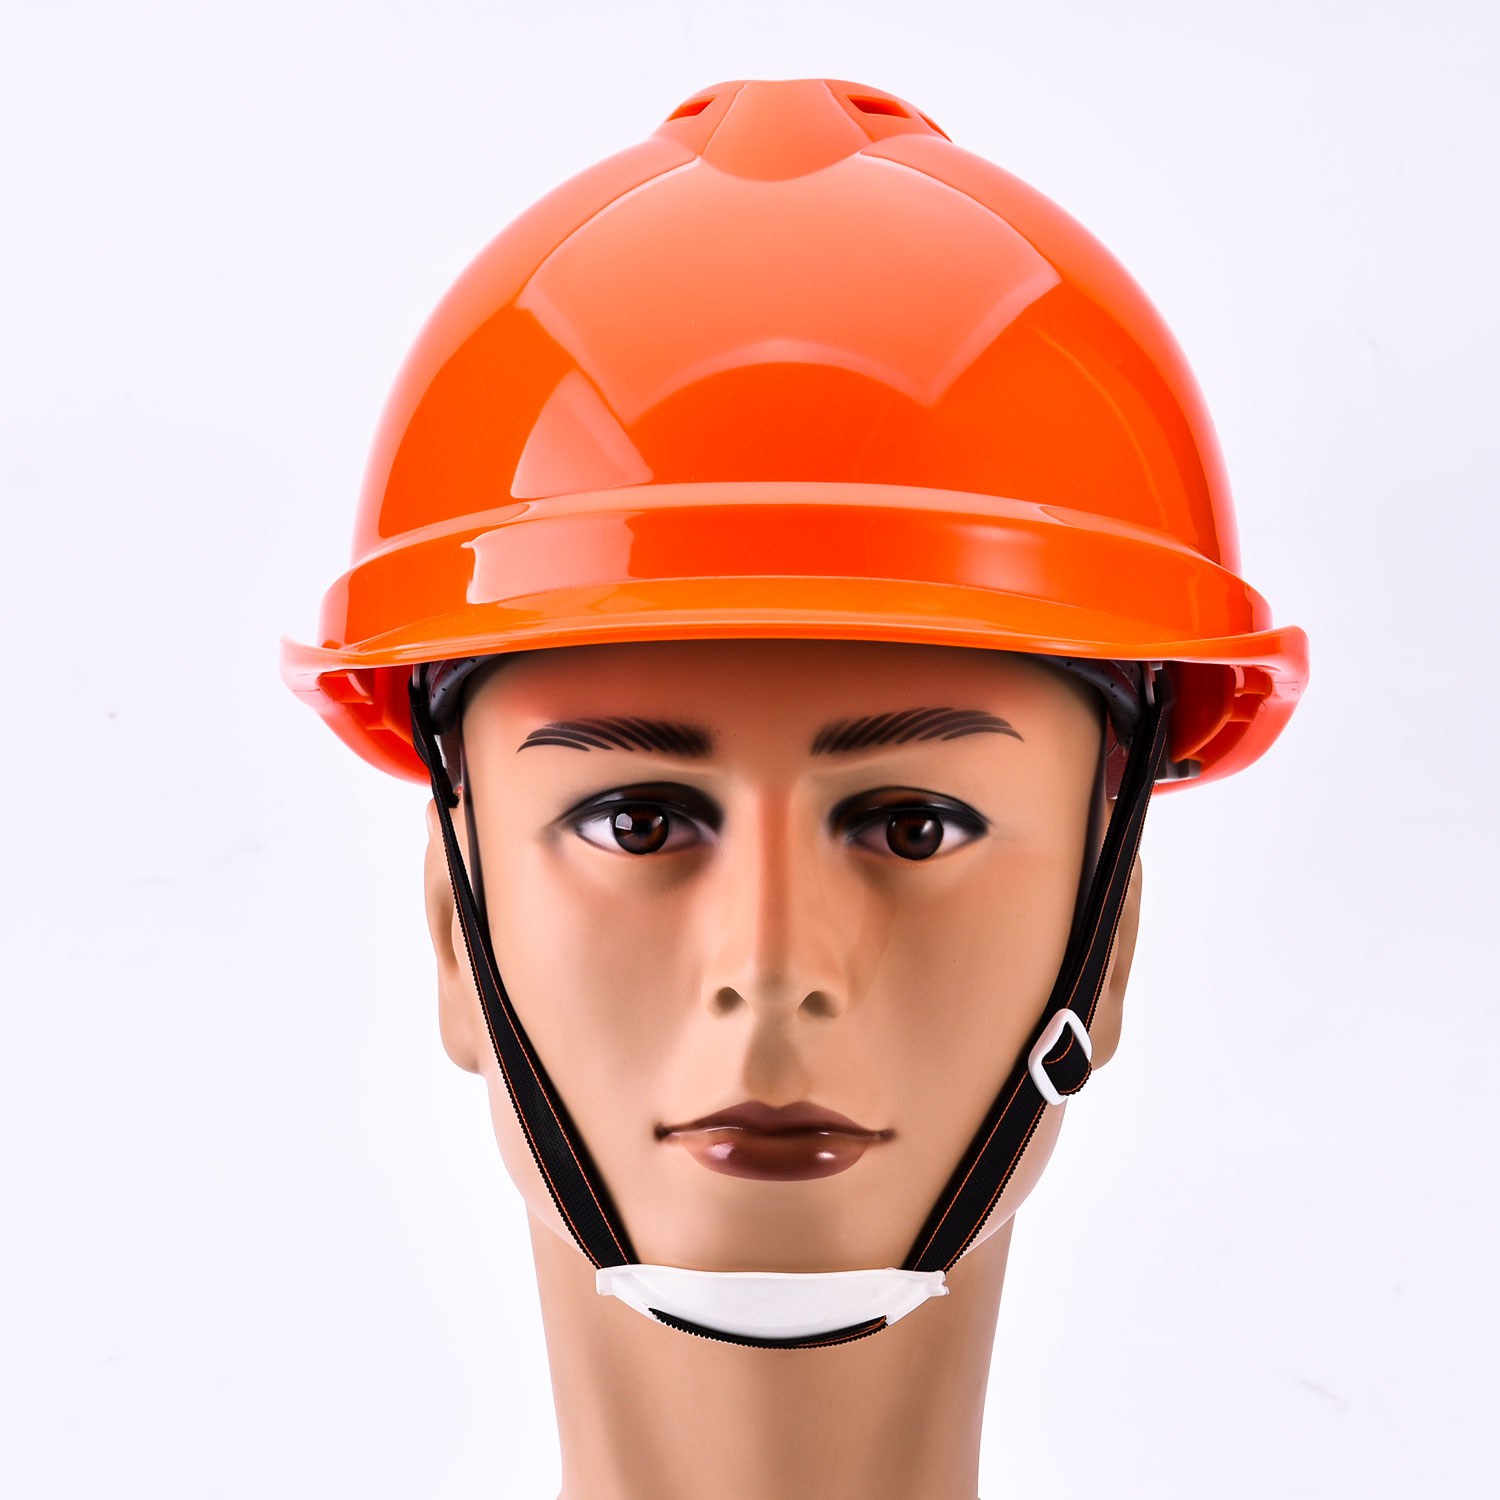 Yellow Industrial Safety Helmet W-002